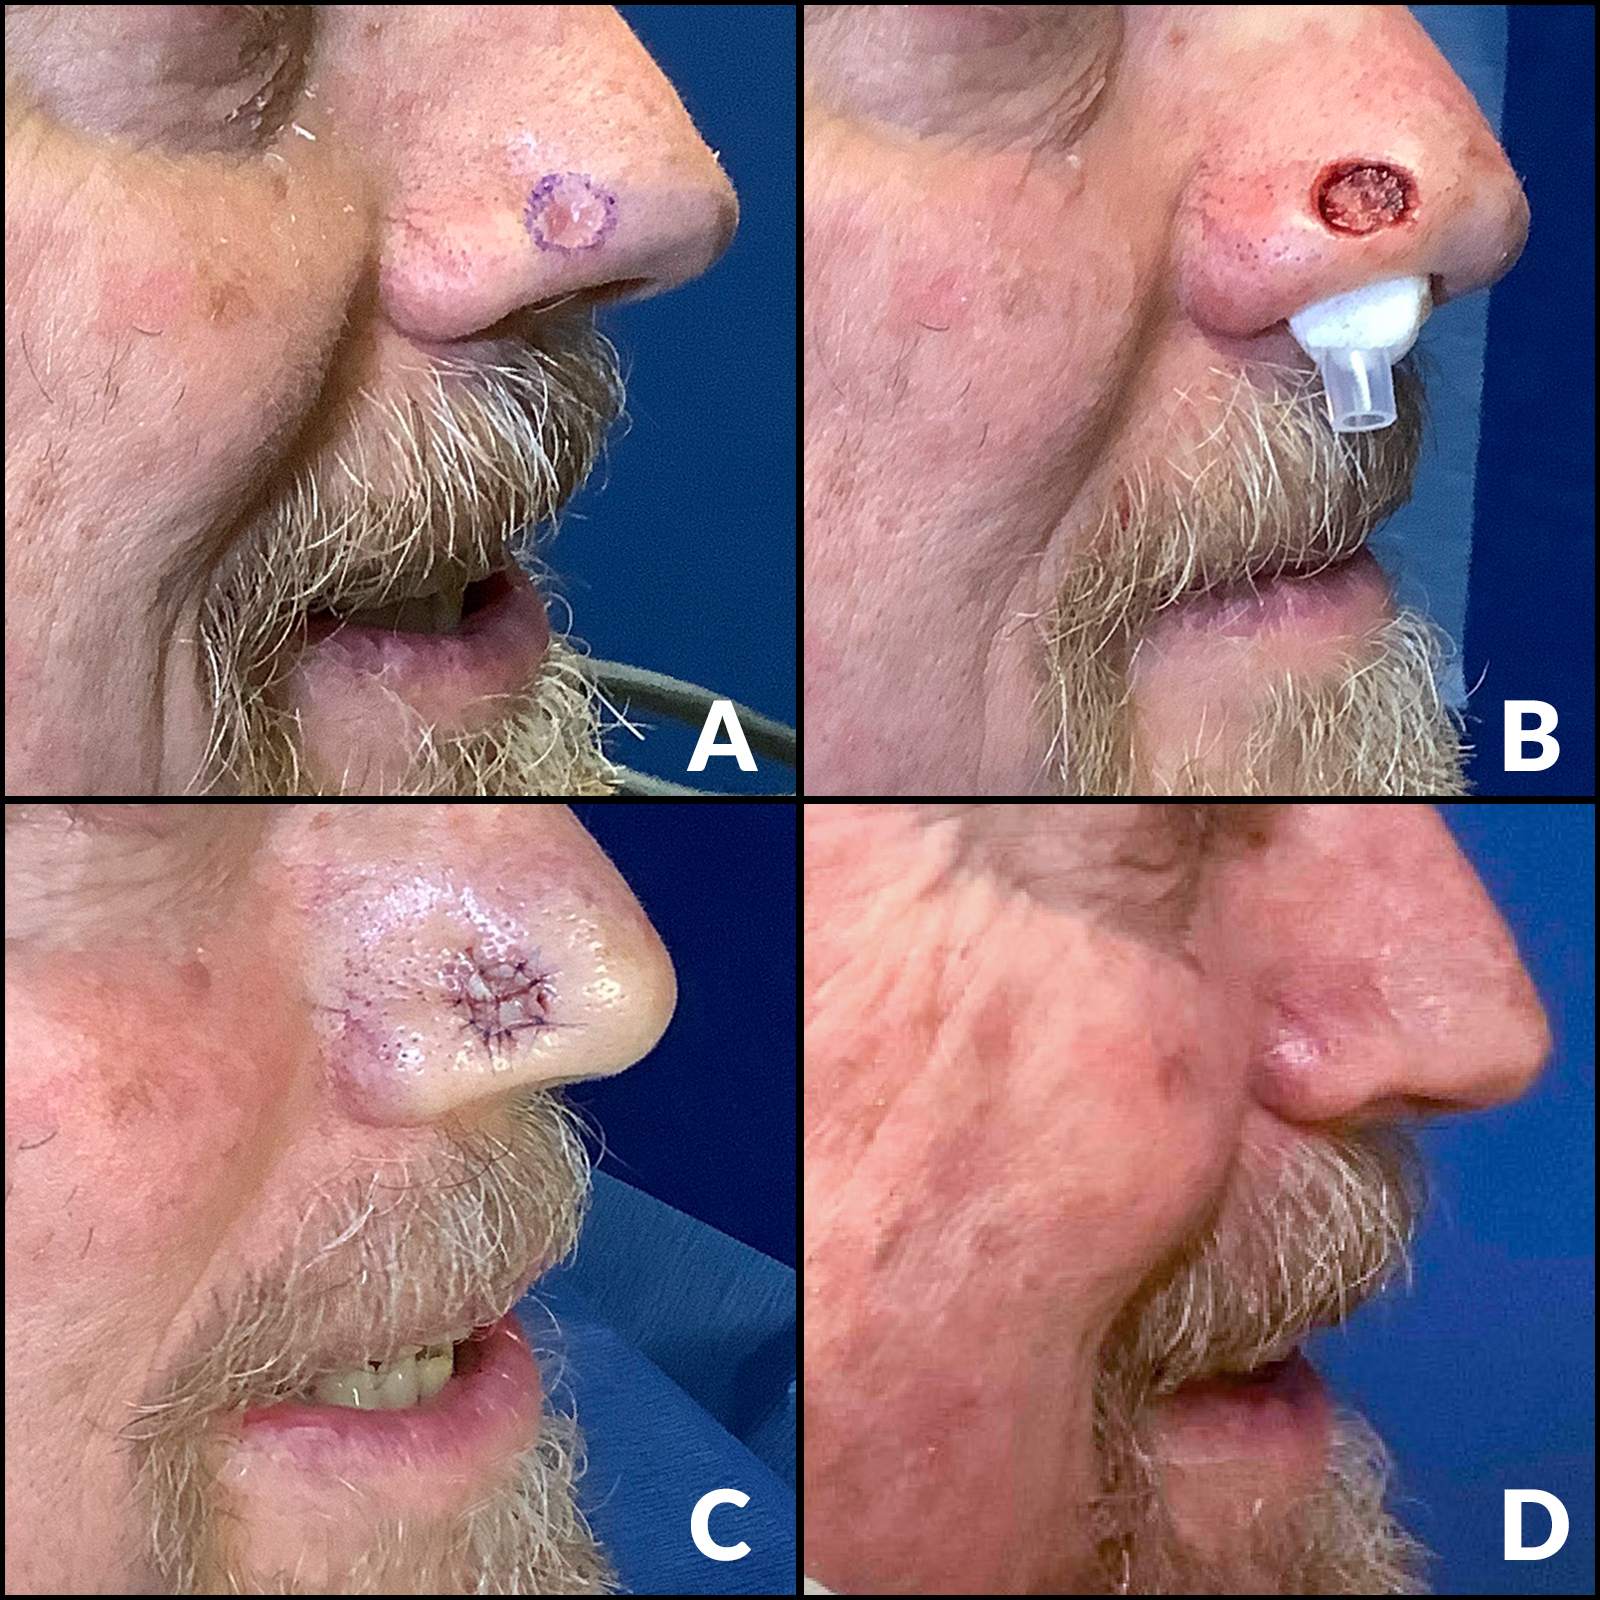 A comparison collage of images for a Mohs surgery patient